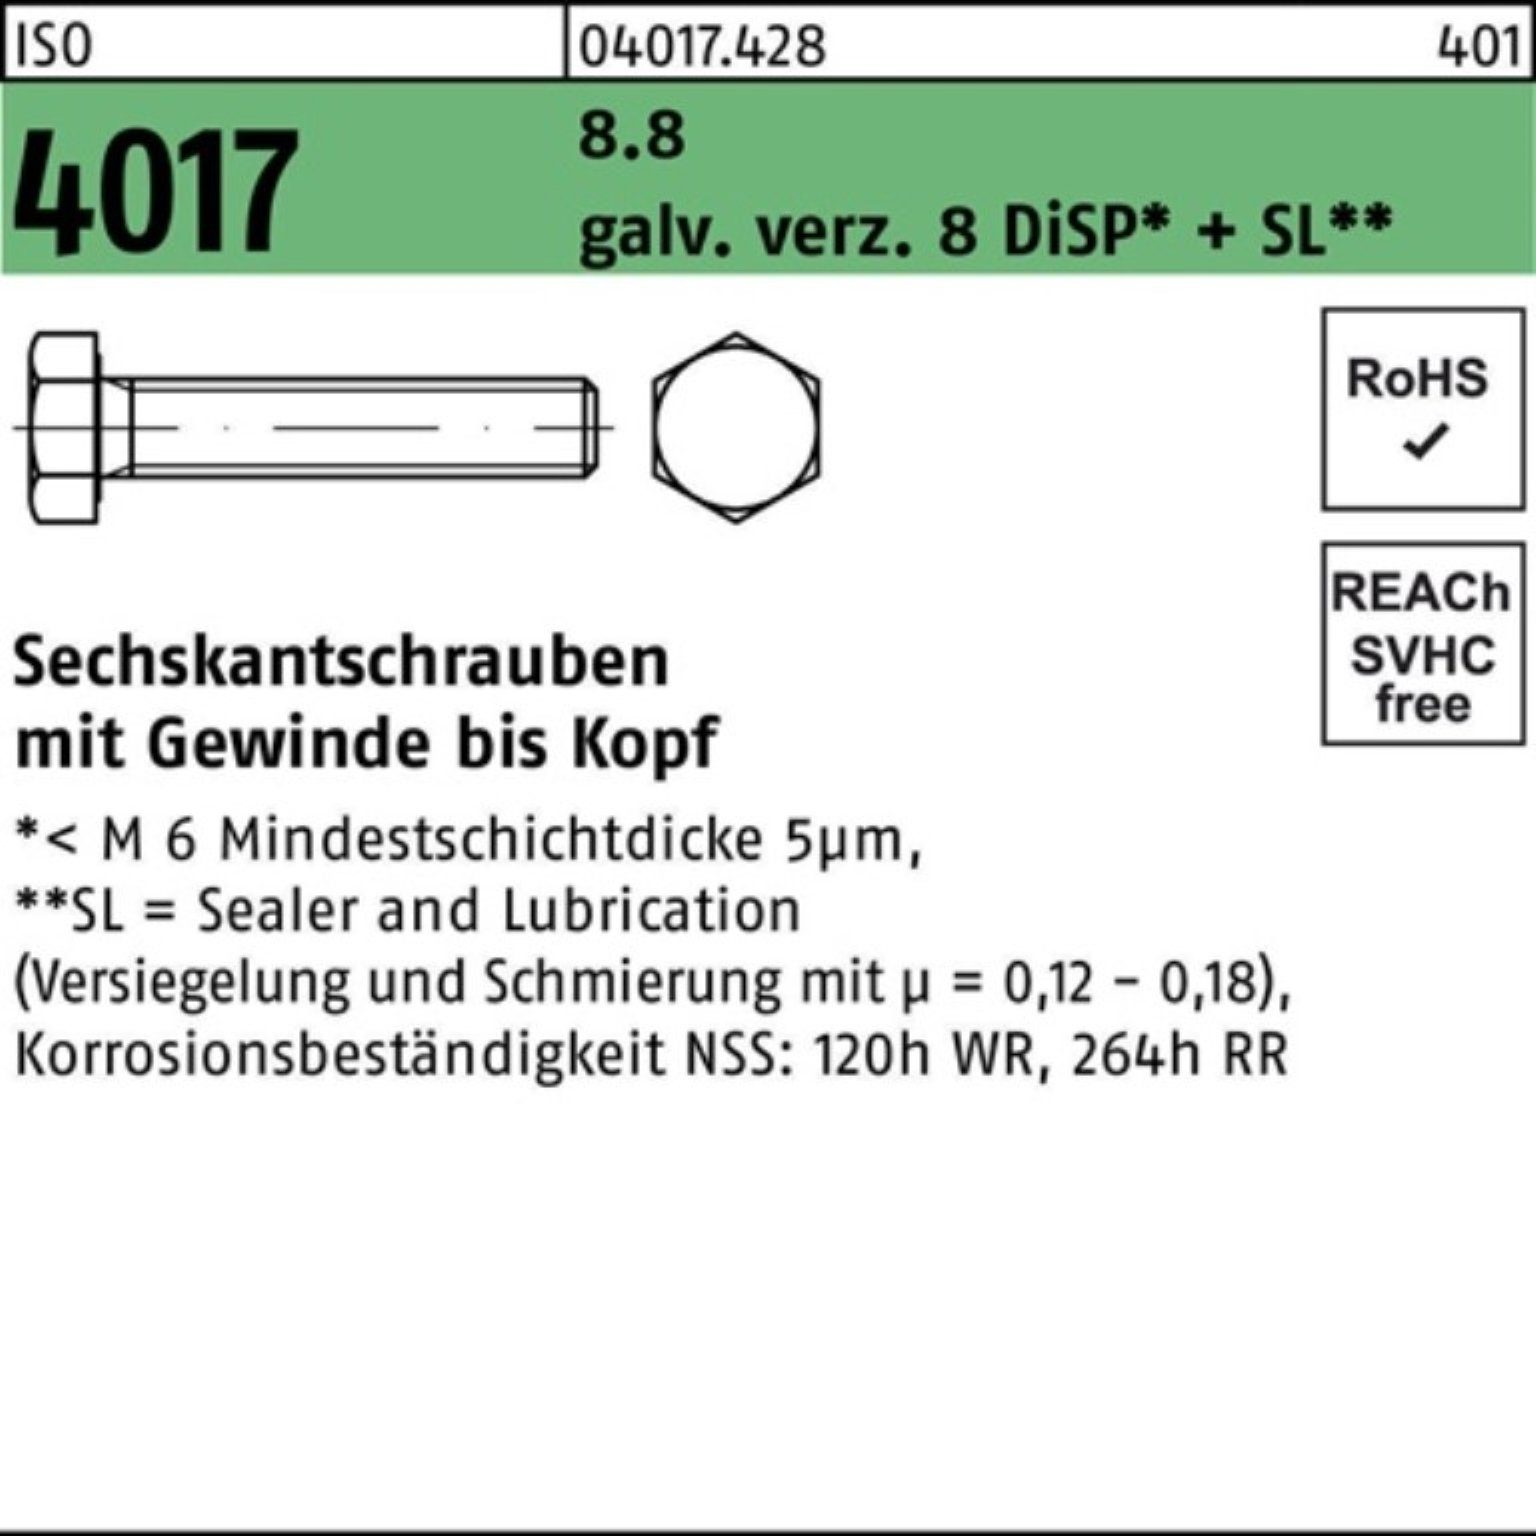 Bufab Sechskantschraube 120 VG M30x Pack 100er 4017 ISO 8.8 8 Sechskantschraube DiS galv.verz